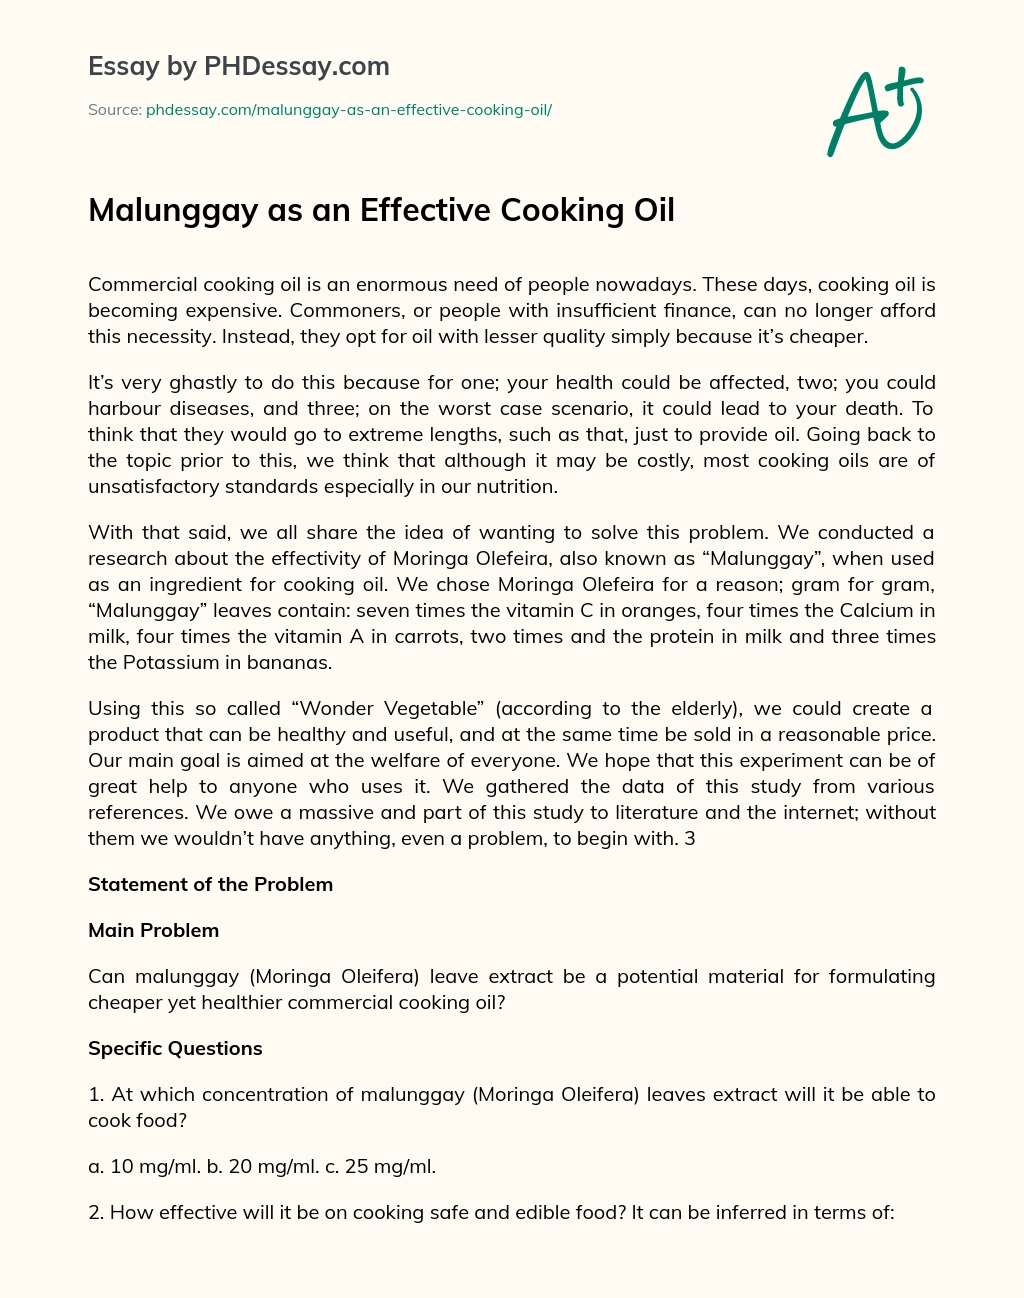 Malunggay as an Effective Cooking Oil essay